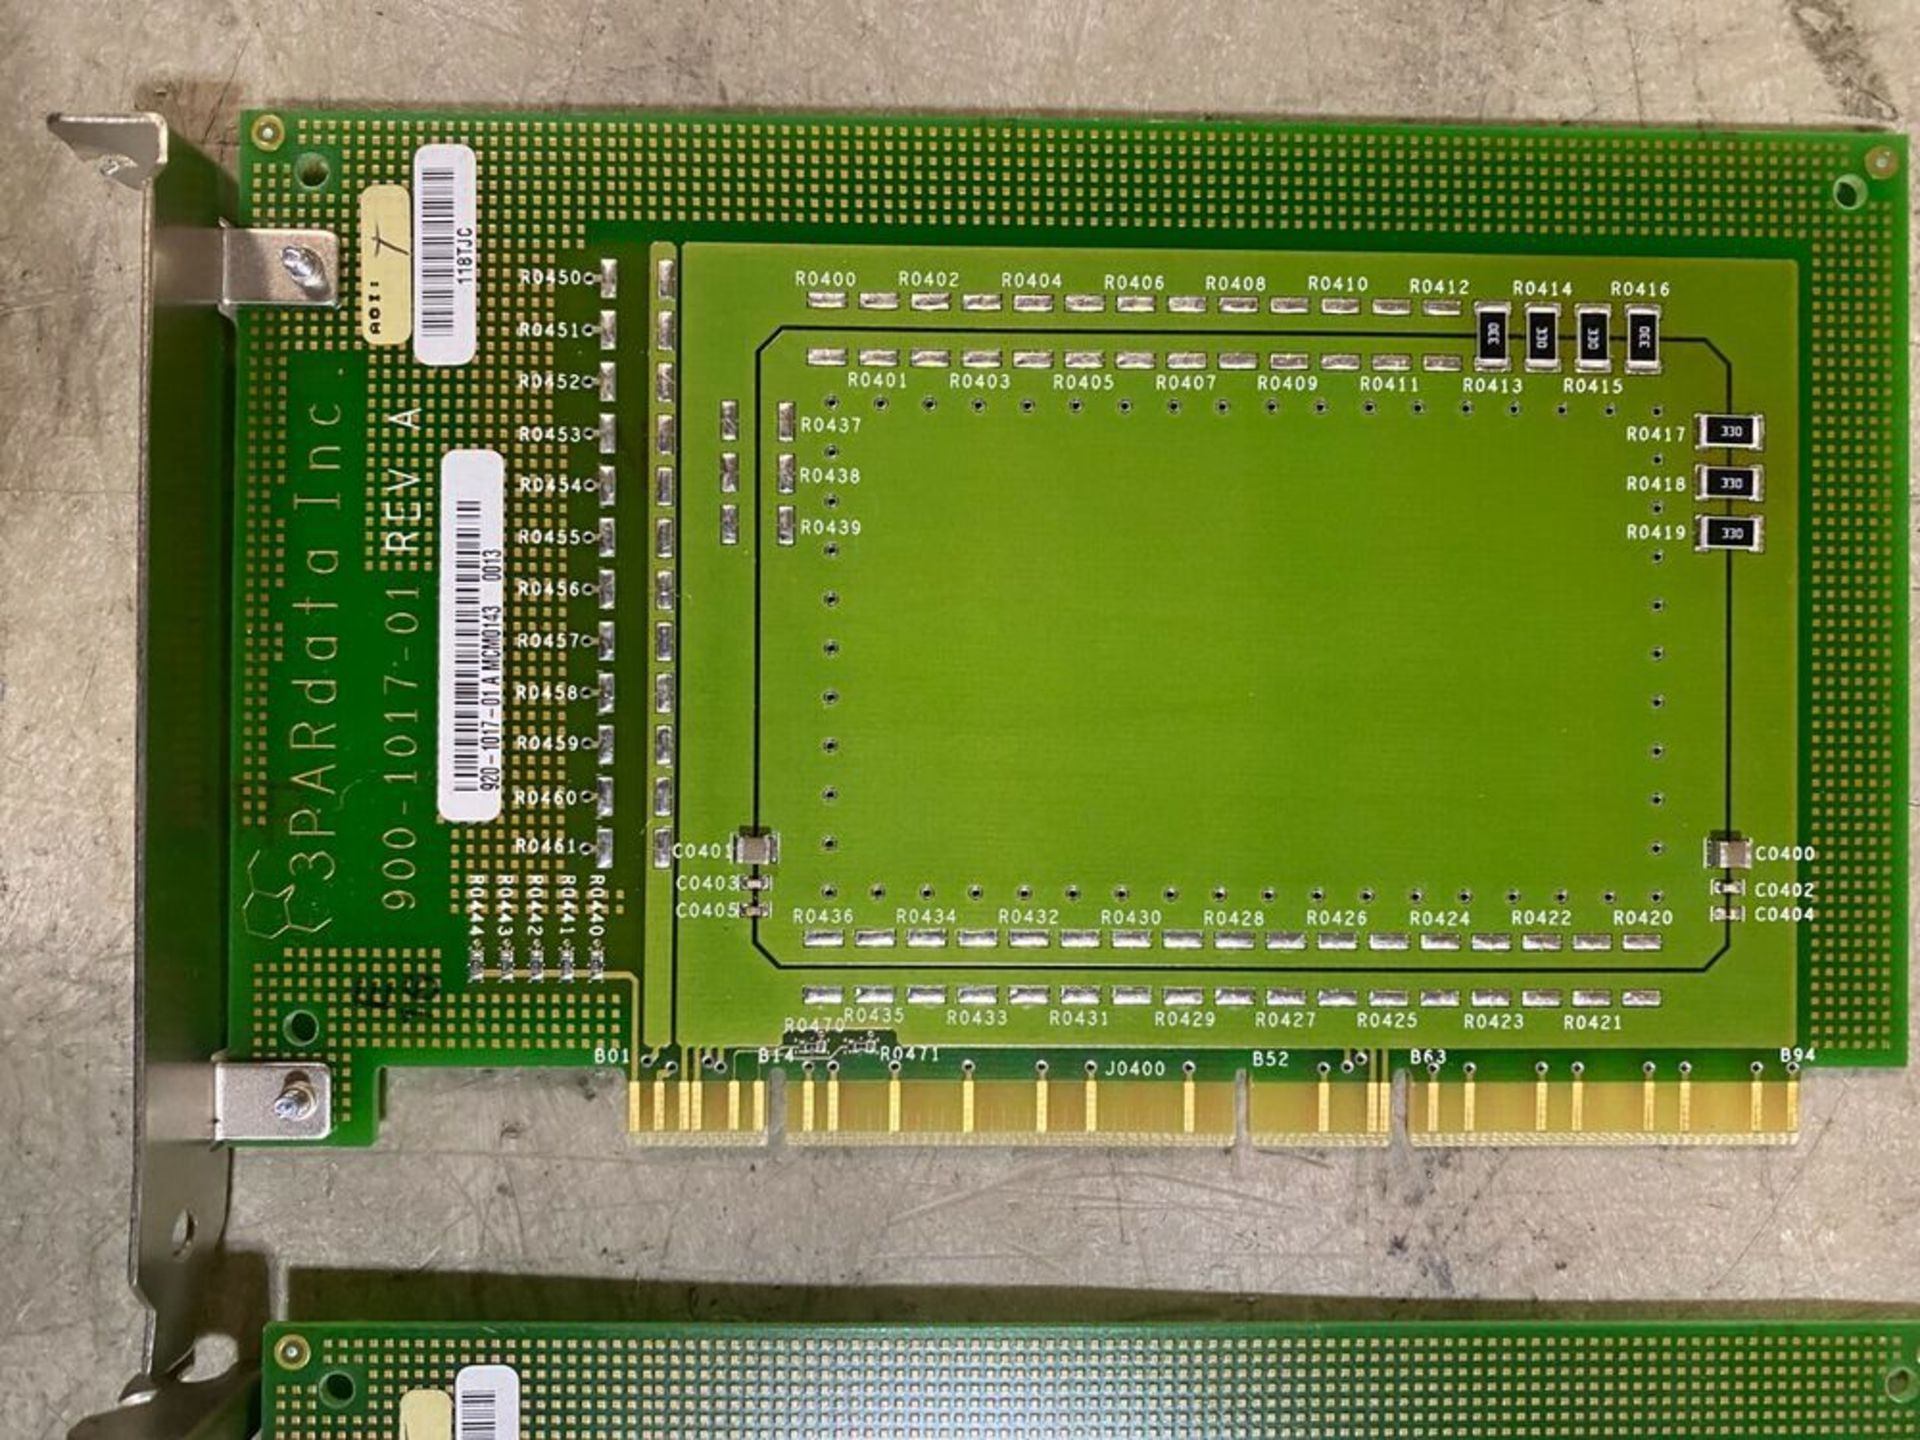 LOT OF 7 - 3PARdata Inc. 900-1017-01 REV A Prototype Development PCI Board - Image 2 of 2